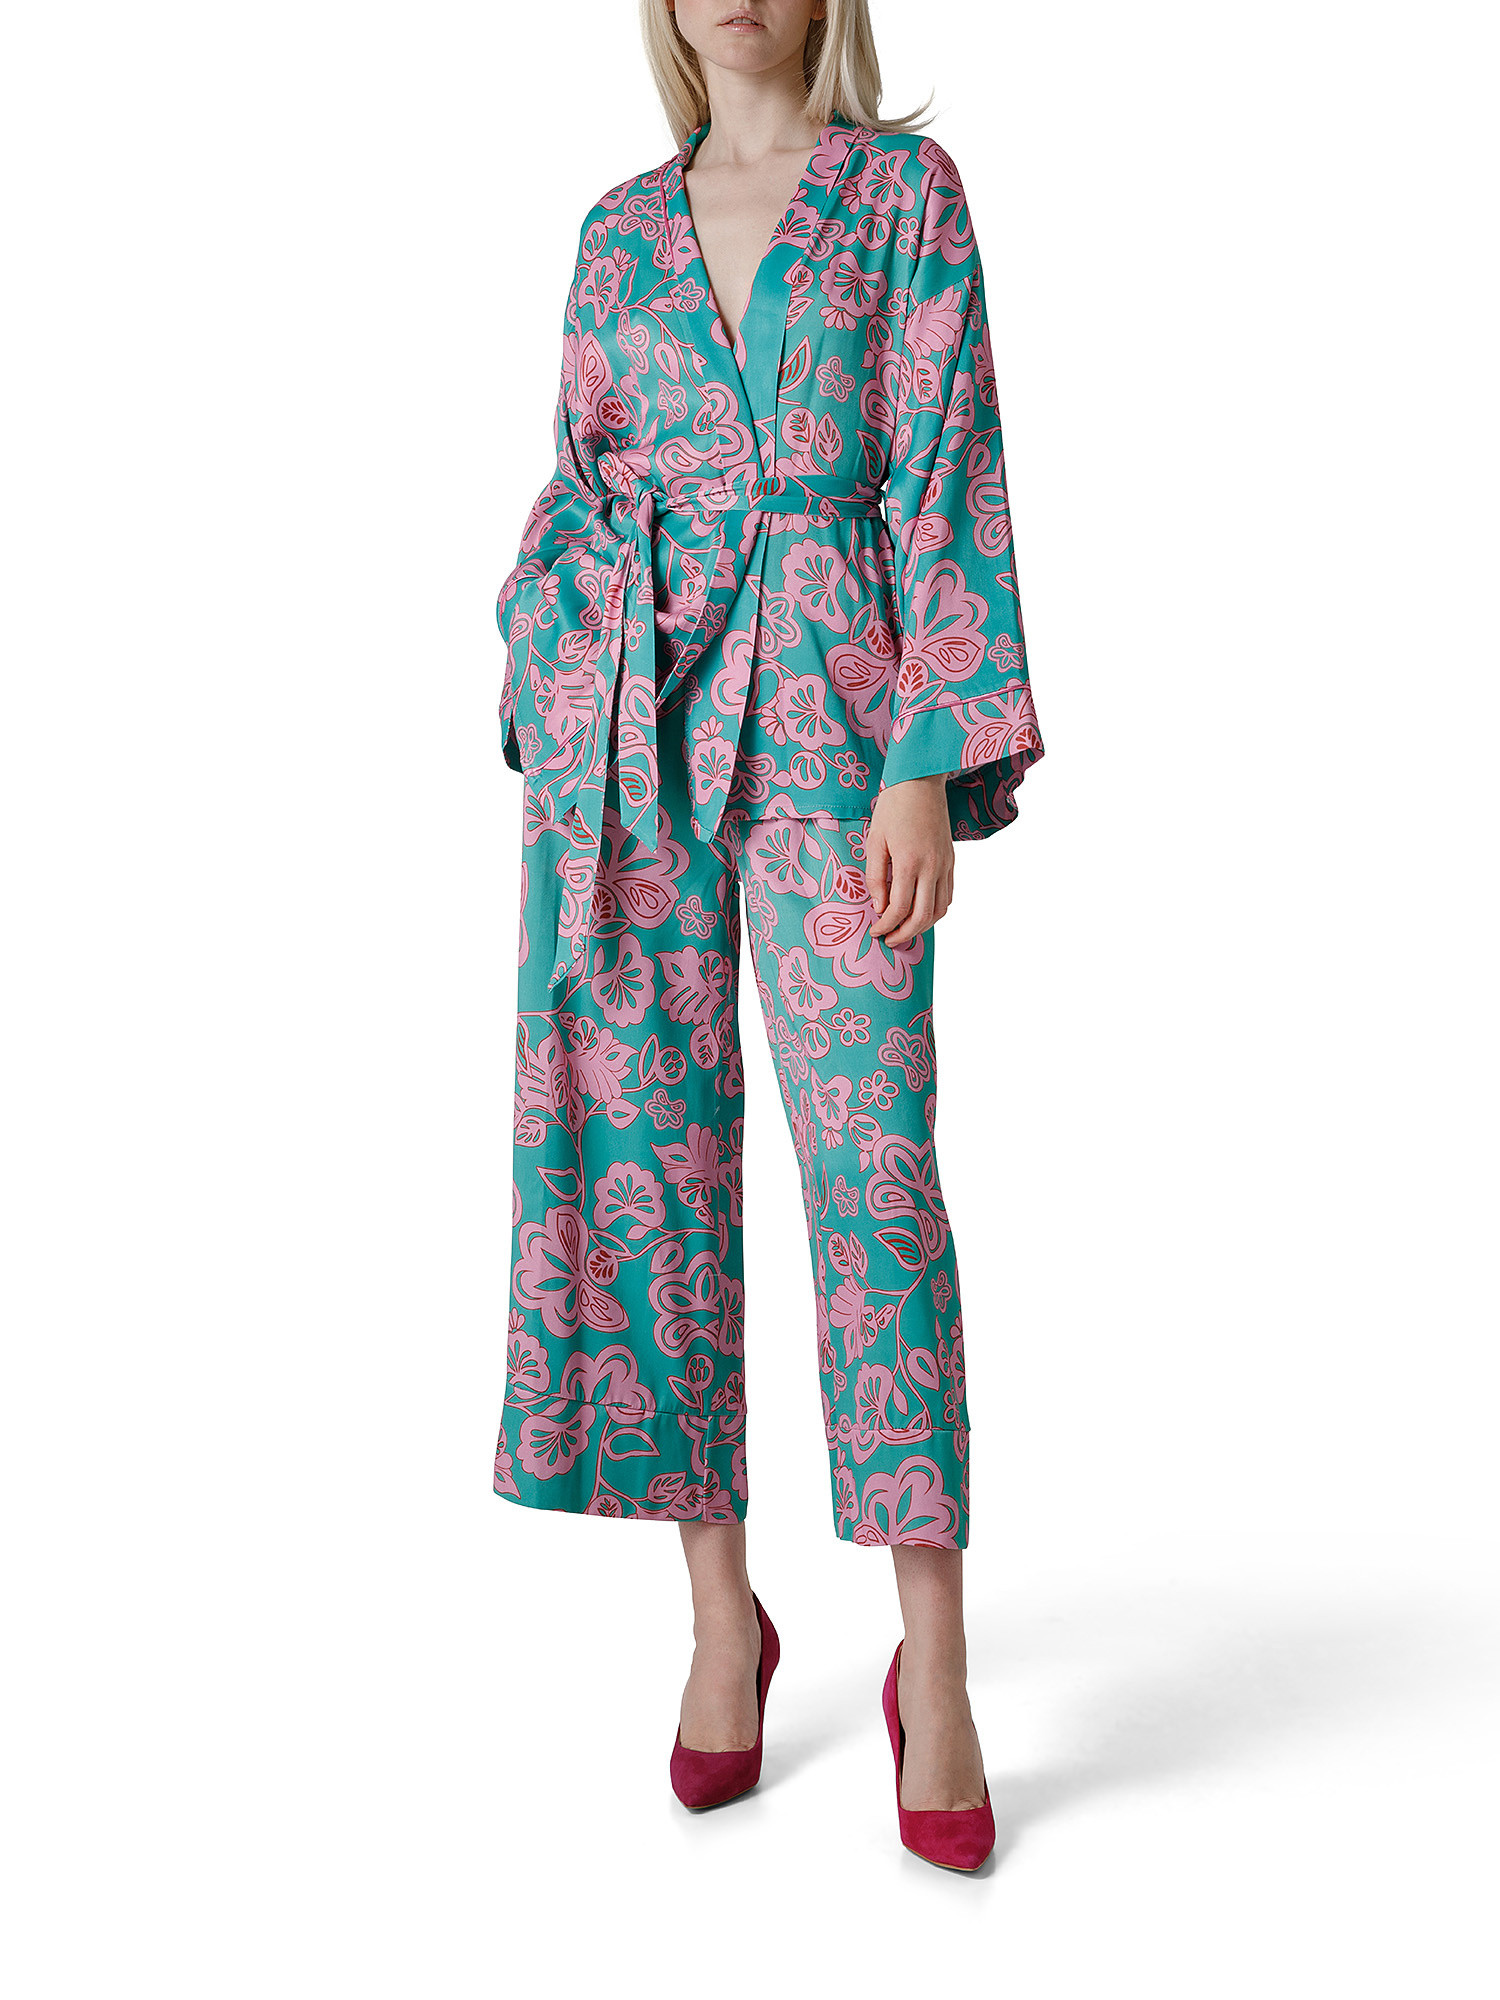 Pantaloni con stampa floreale, Multicolor, large image number 3